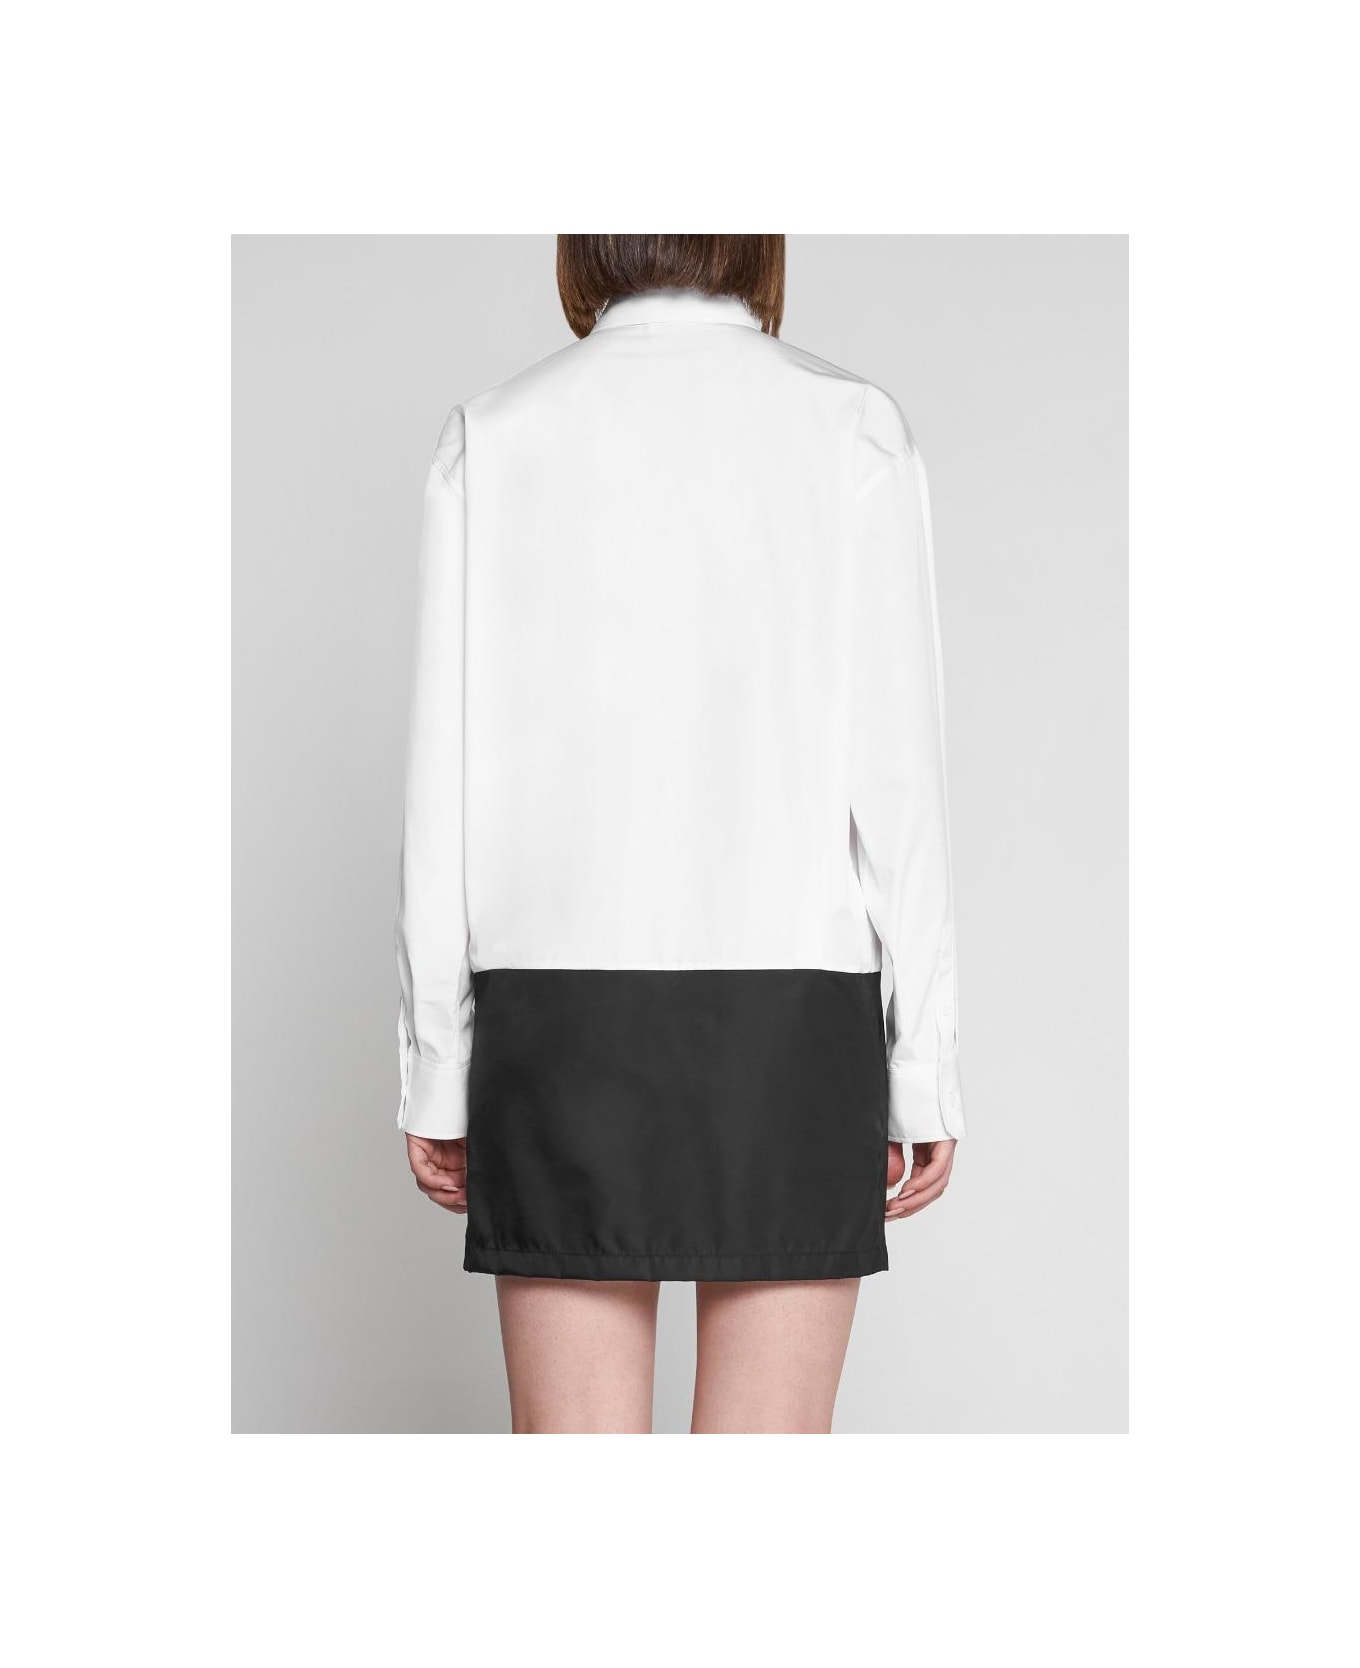 Prada Cotton And Re-nylon Shirt Dress - Bianco/Nero